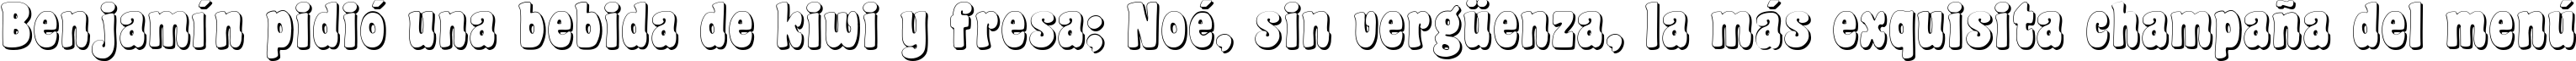 Пример написания шрифтом Coaster Shadow текста на испанском